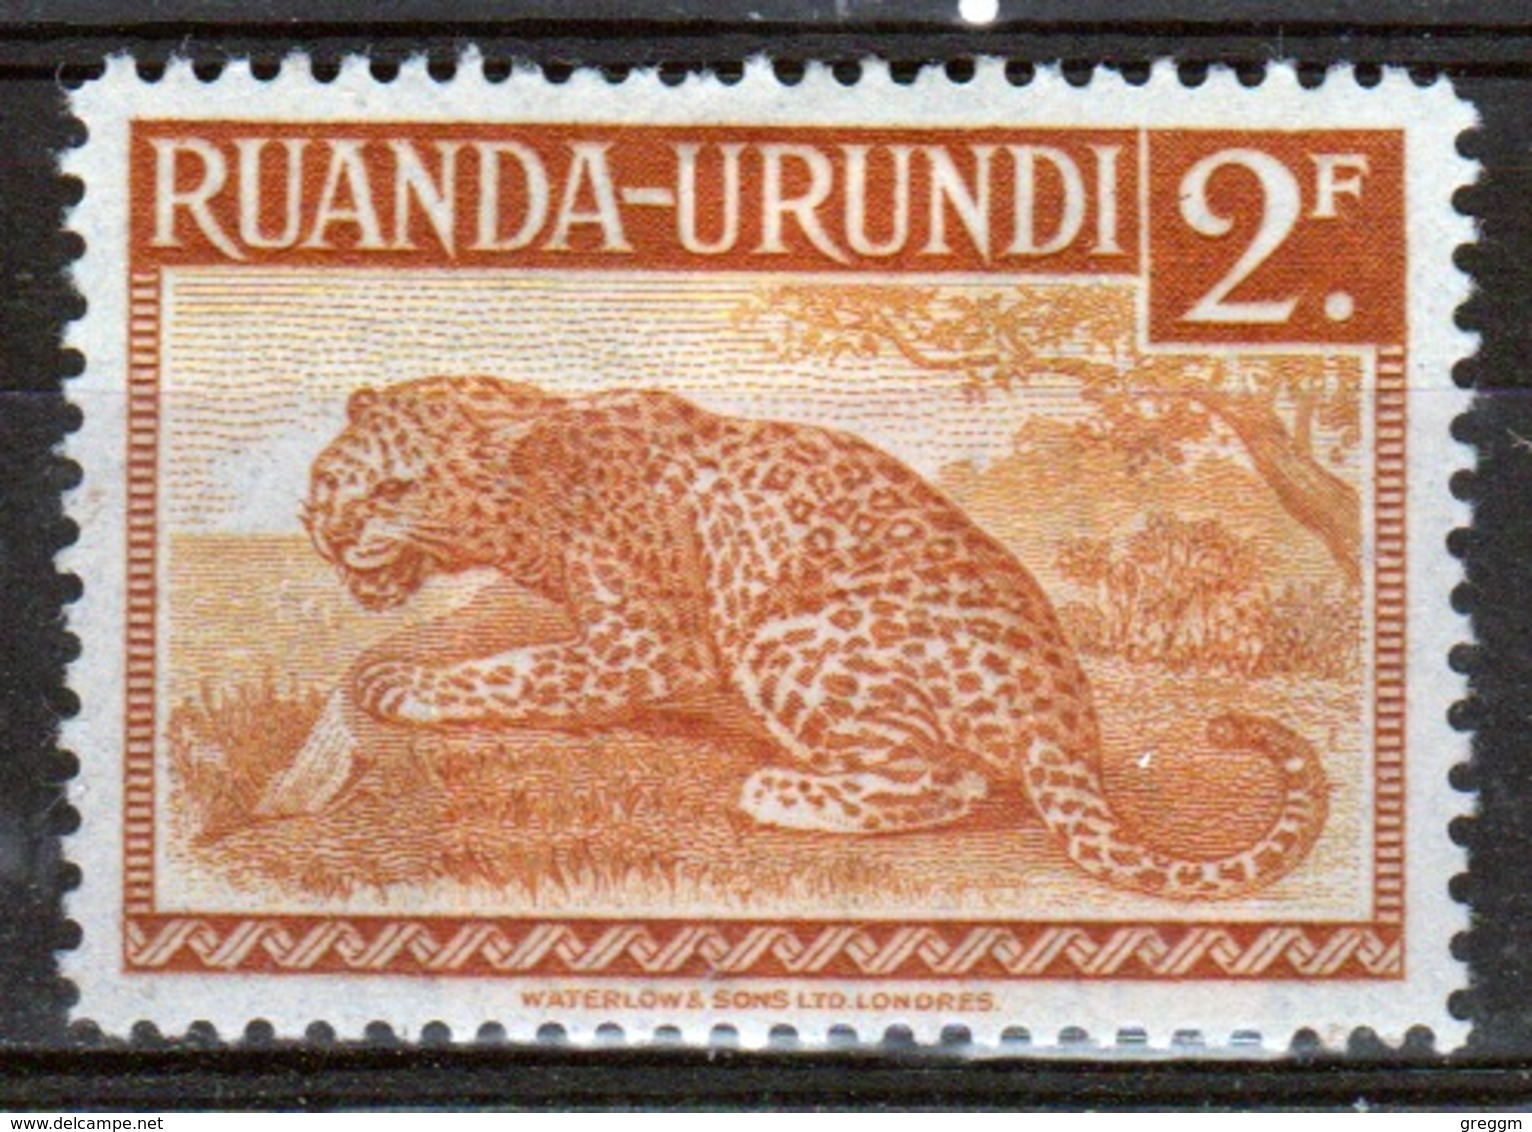 Ruanda-Urundi 1942 Single 2f Stamp From The Definitive Set. - Unused Stamps